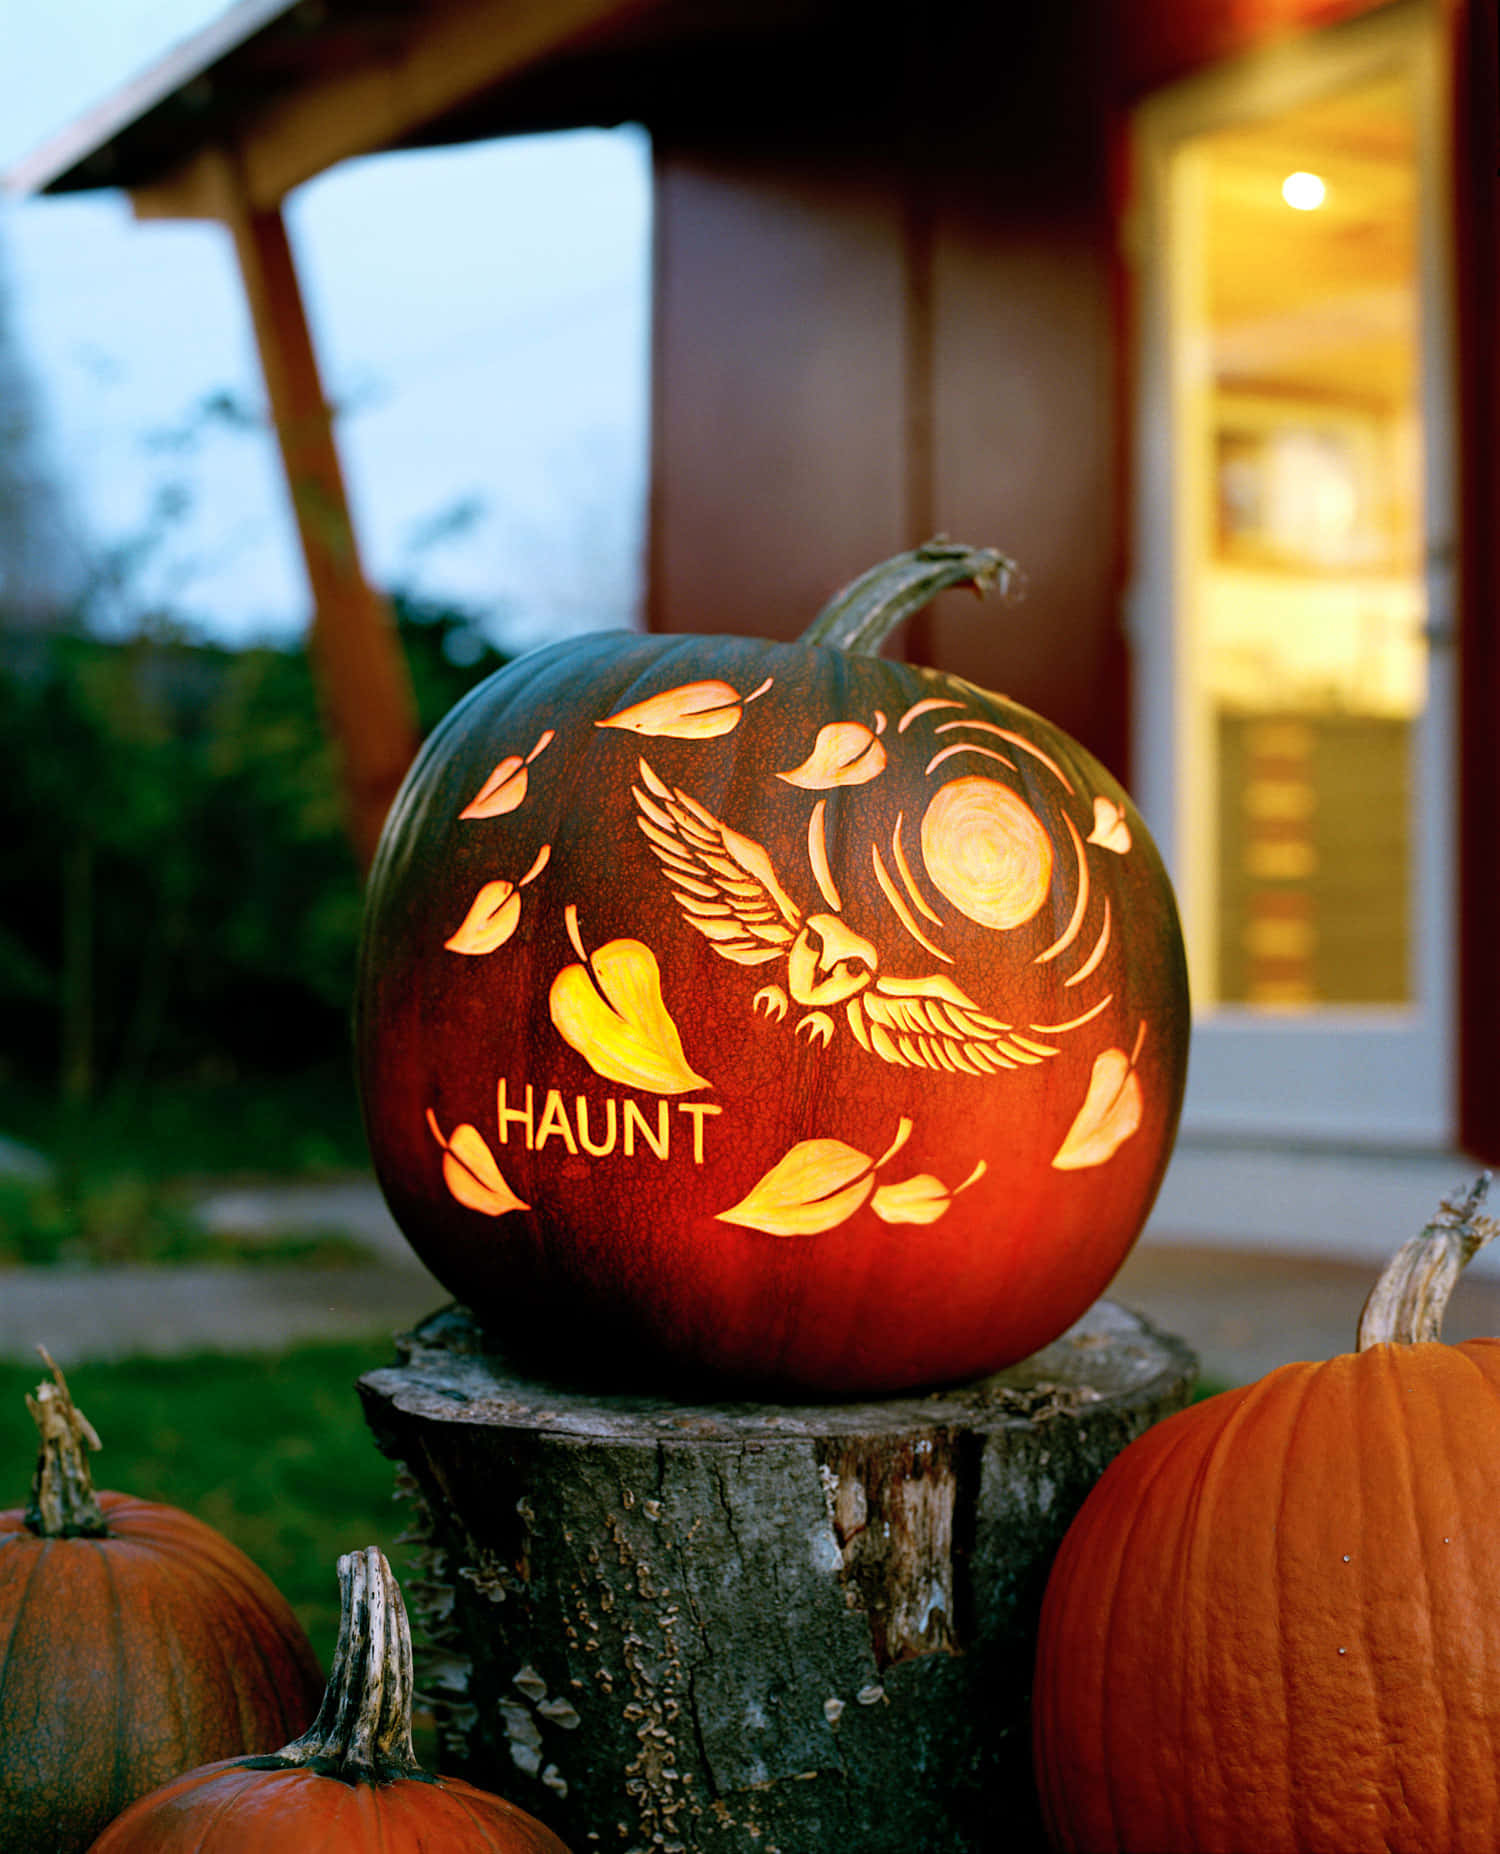 Owl Haunt Pumpkin Carving Pictures